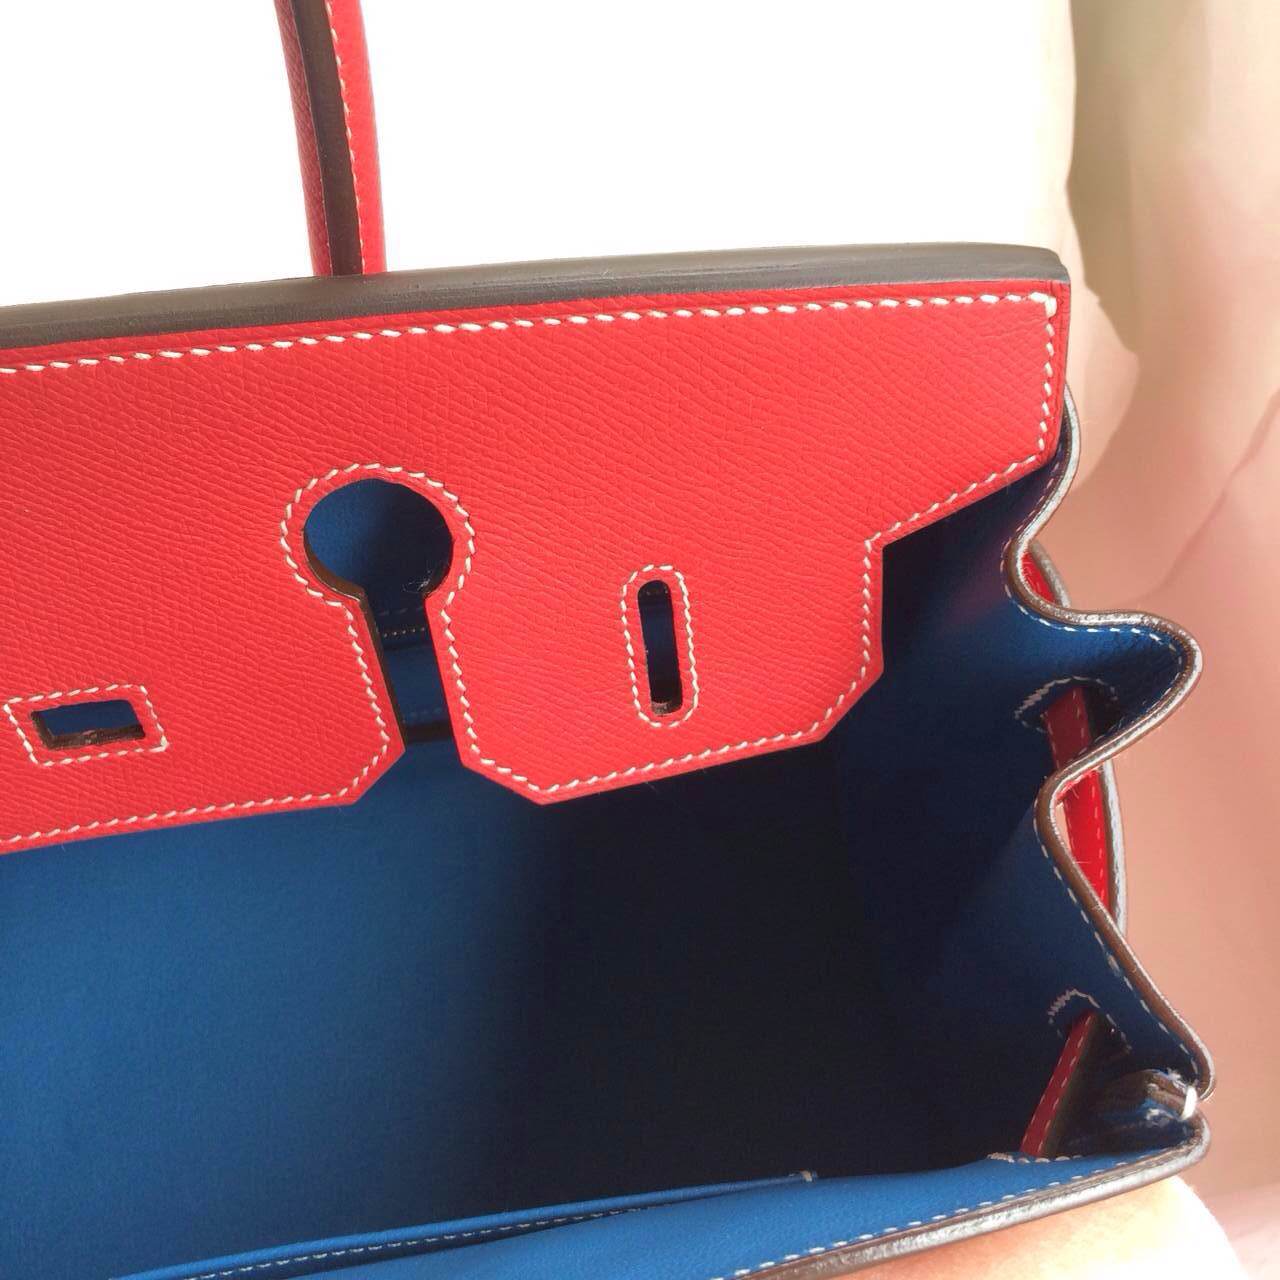 Q5 Candy Red/inner 7Q Cribe Blue France Epsom Leather Birkin Bag Gold Hardware